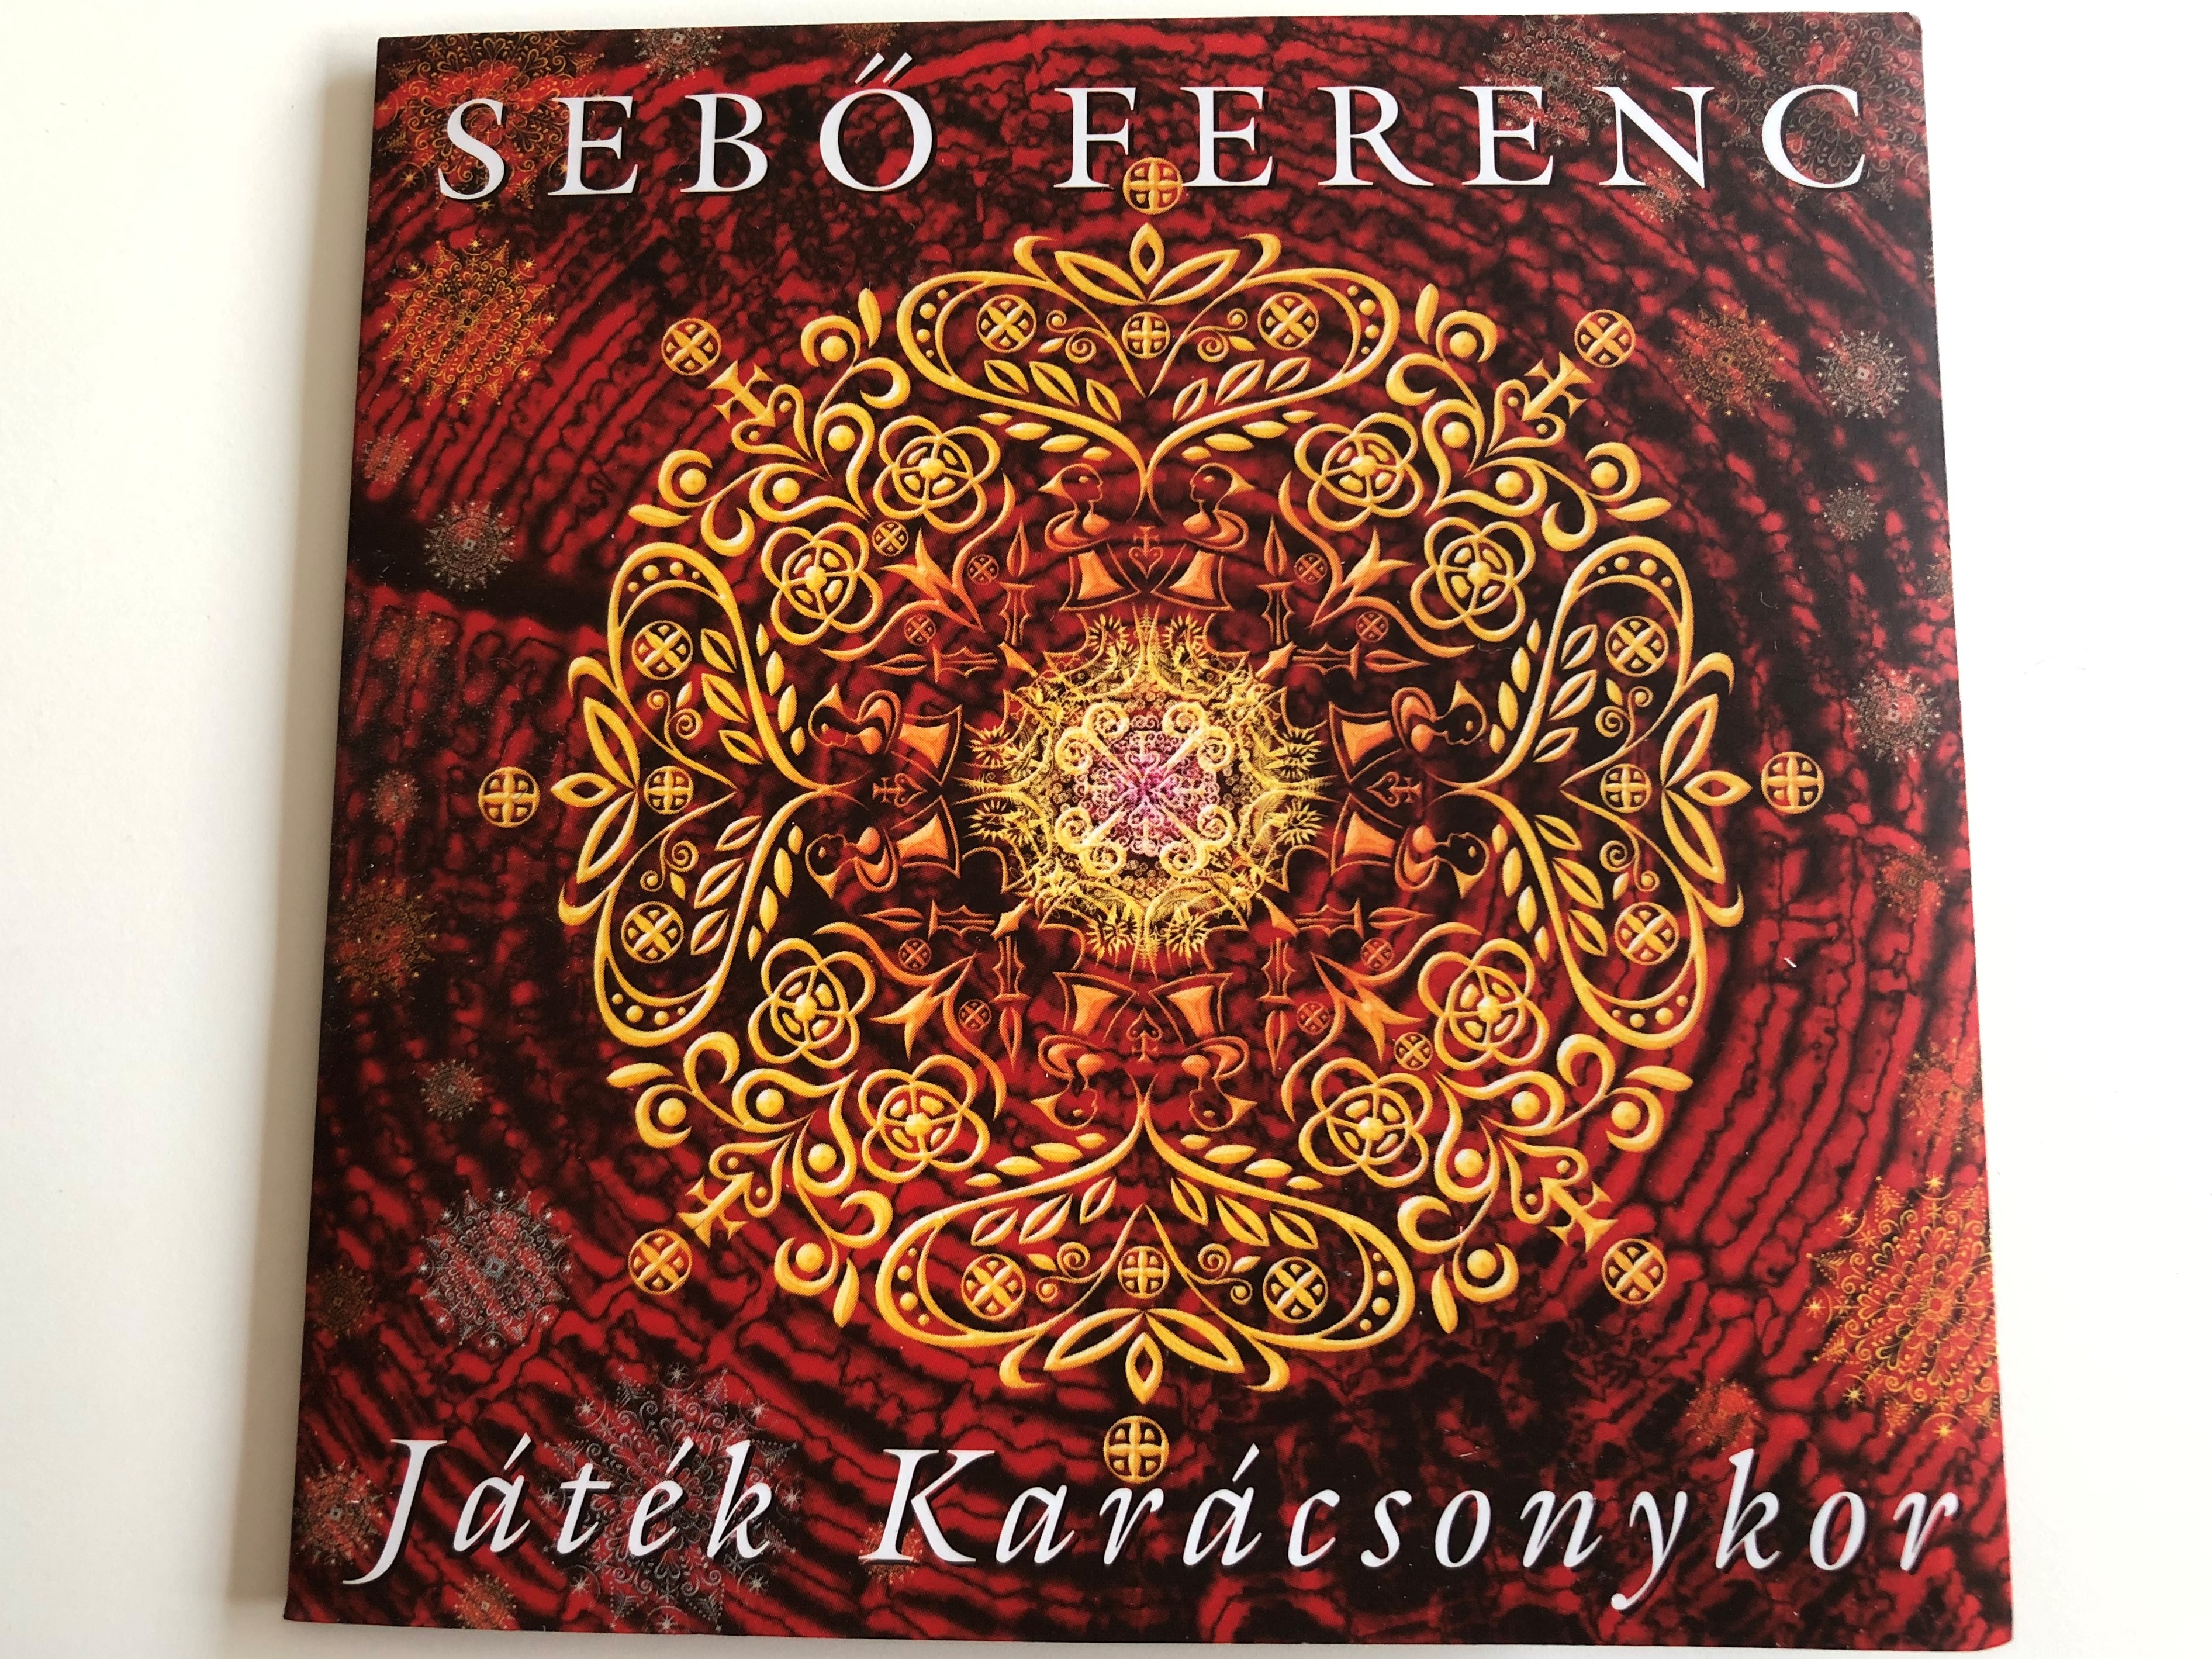 seb-ferenc-j-t-k-kar-csonykor-christmas-play-audio-cd-2010-gryllus-gcd-102-1-.jpg